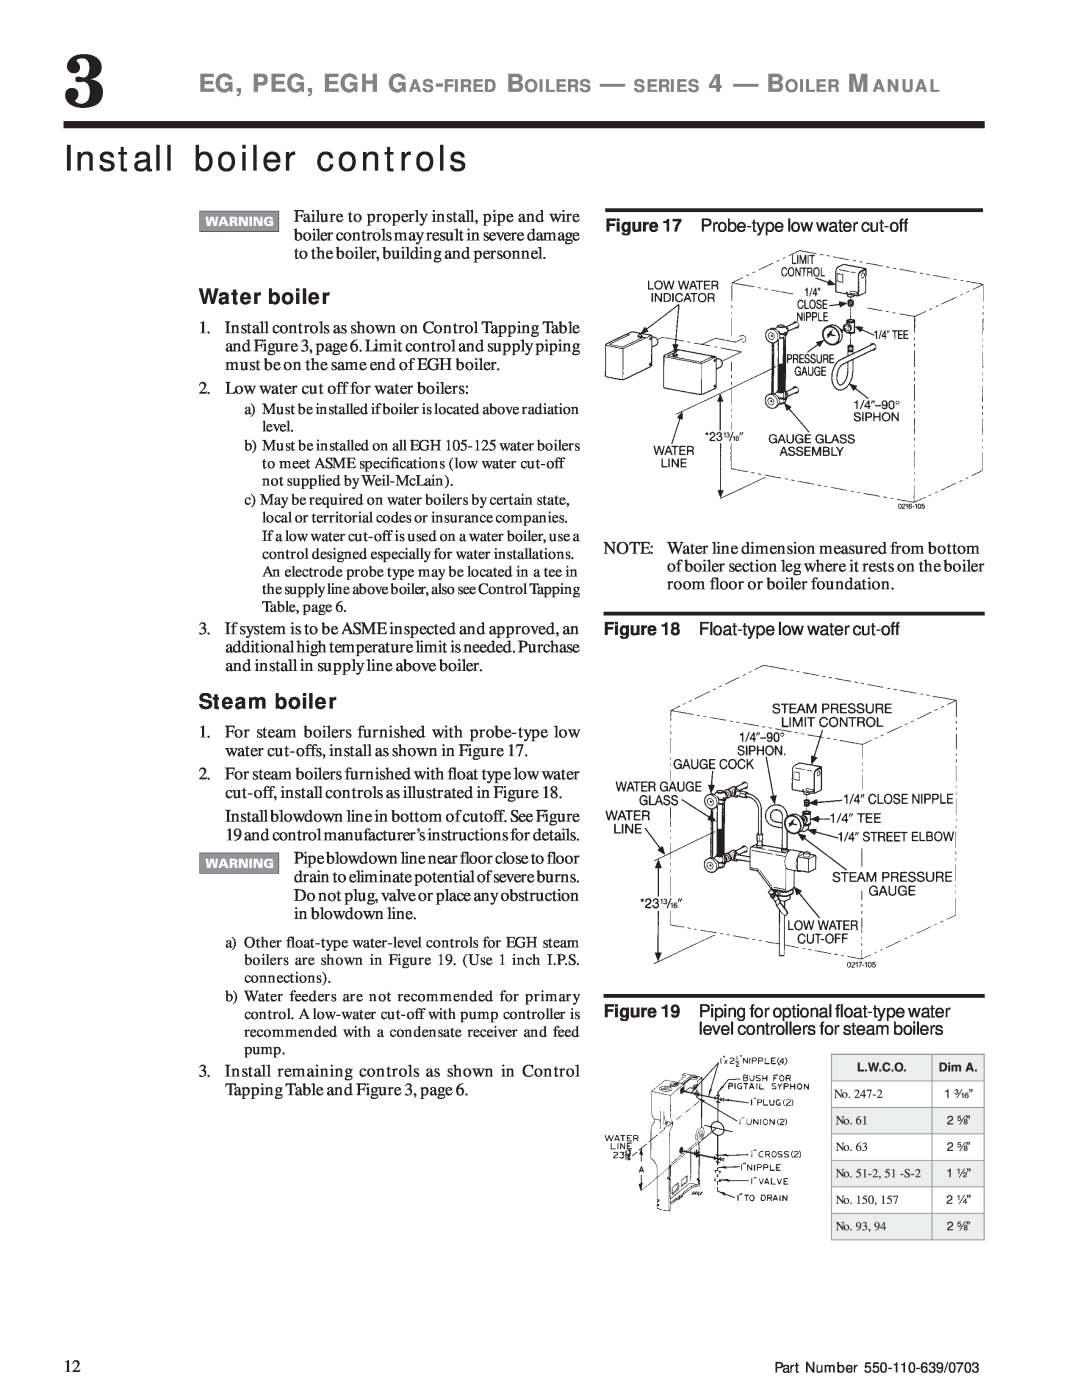 Weil-McLain EG manual Install boiler controls, Water boiler, Steam boiler, Probe-typelow water cut-off 